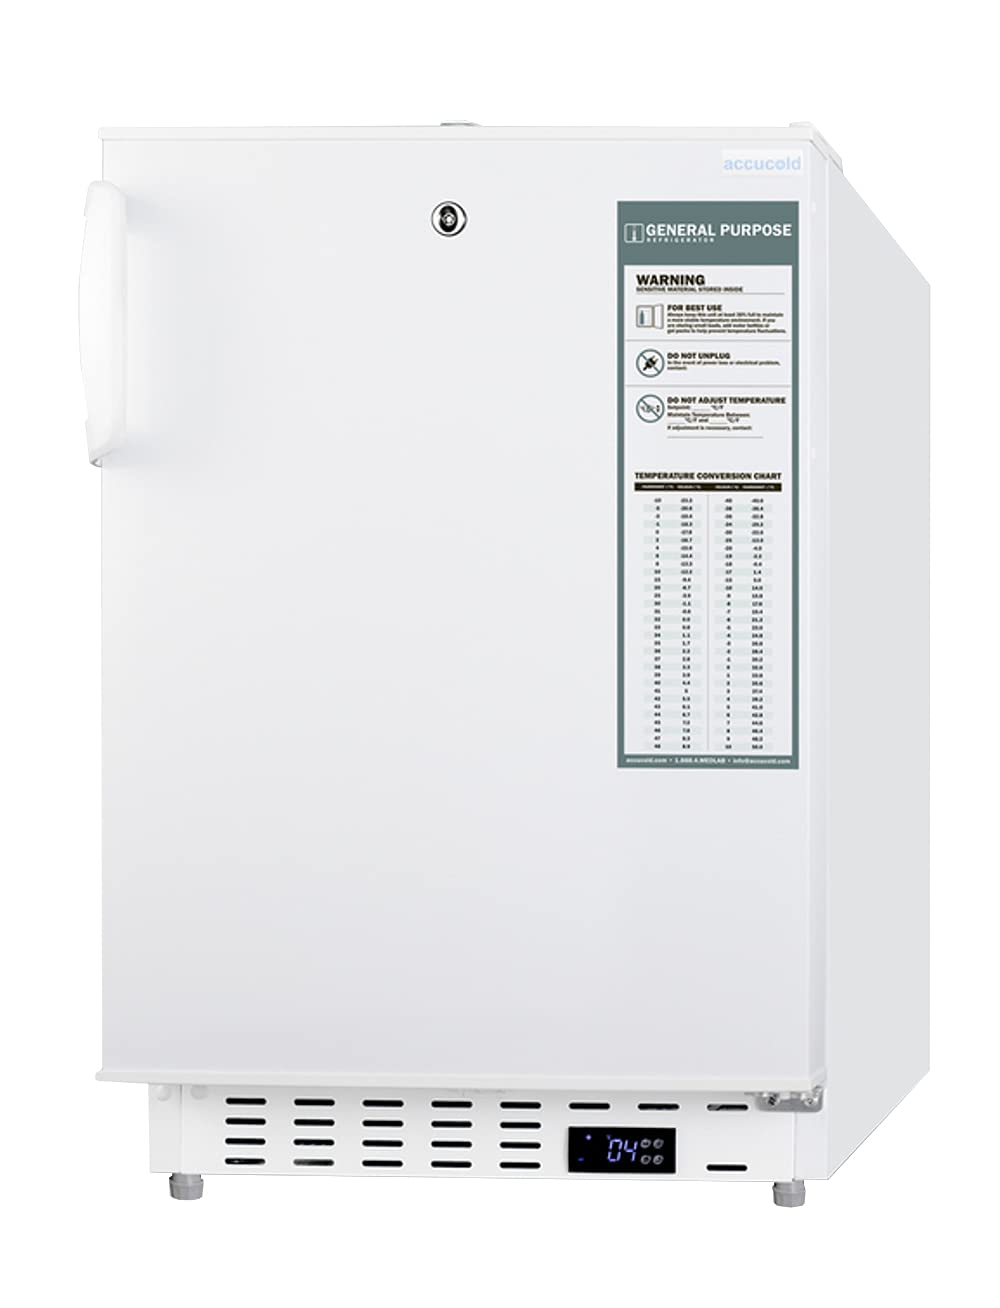 Summit Appliance ADA404REF 20" Wide Built-In All-Refrigerator, ADA Compliant, Factory-installed Lock, 3.32 cu.ft Capacity, Temperature & Open Door Alarms, Automatic Defrost, Adjustable Thermostat